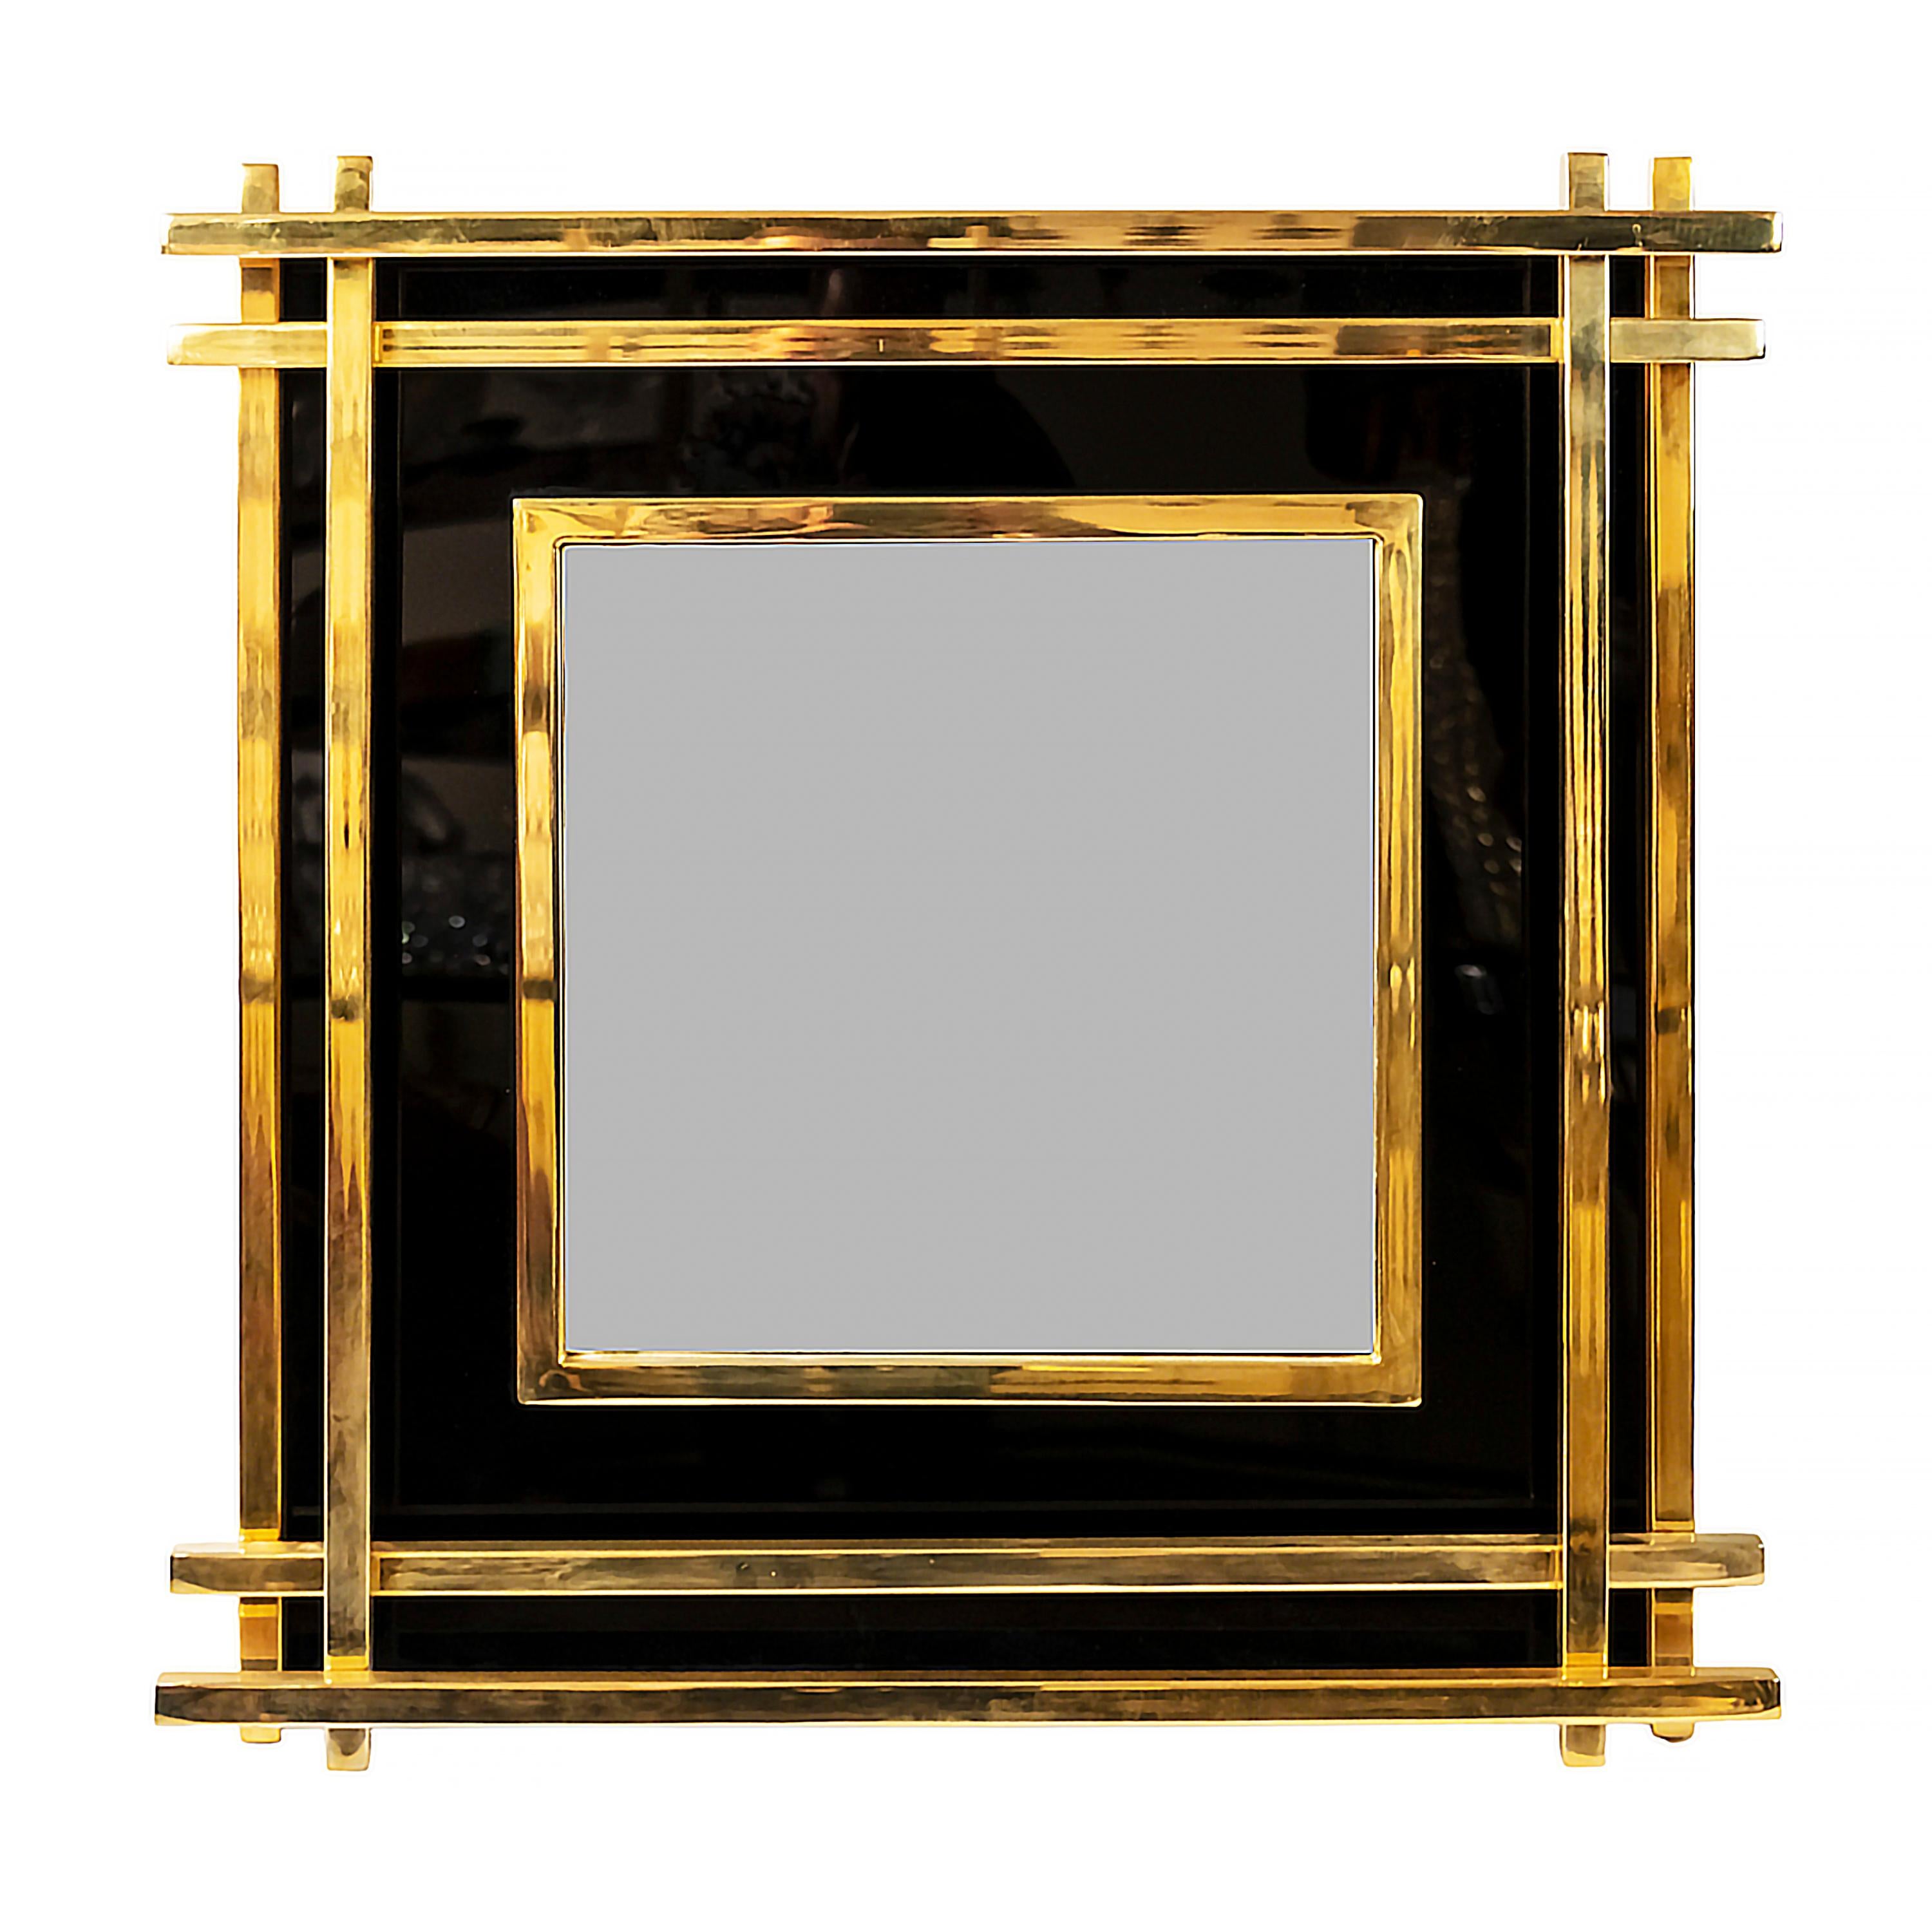 Italian midcentury brass and plexiglass frame wall mirror from 1970s.



.